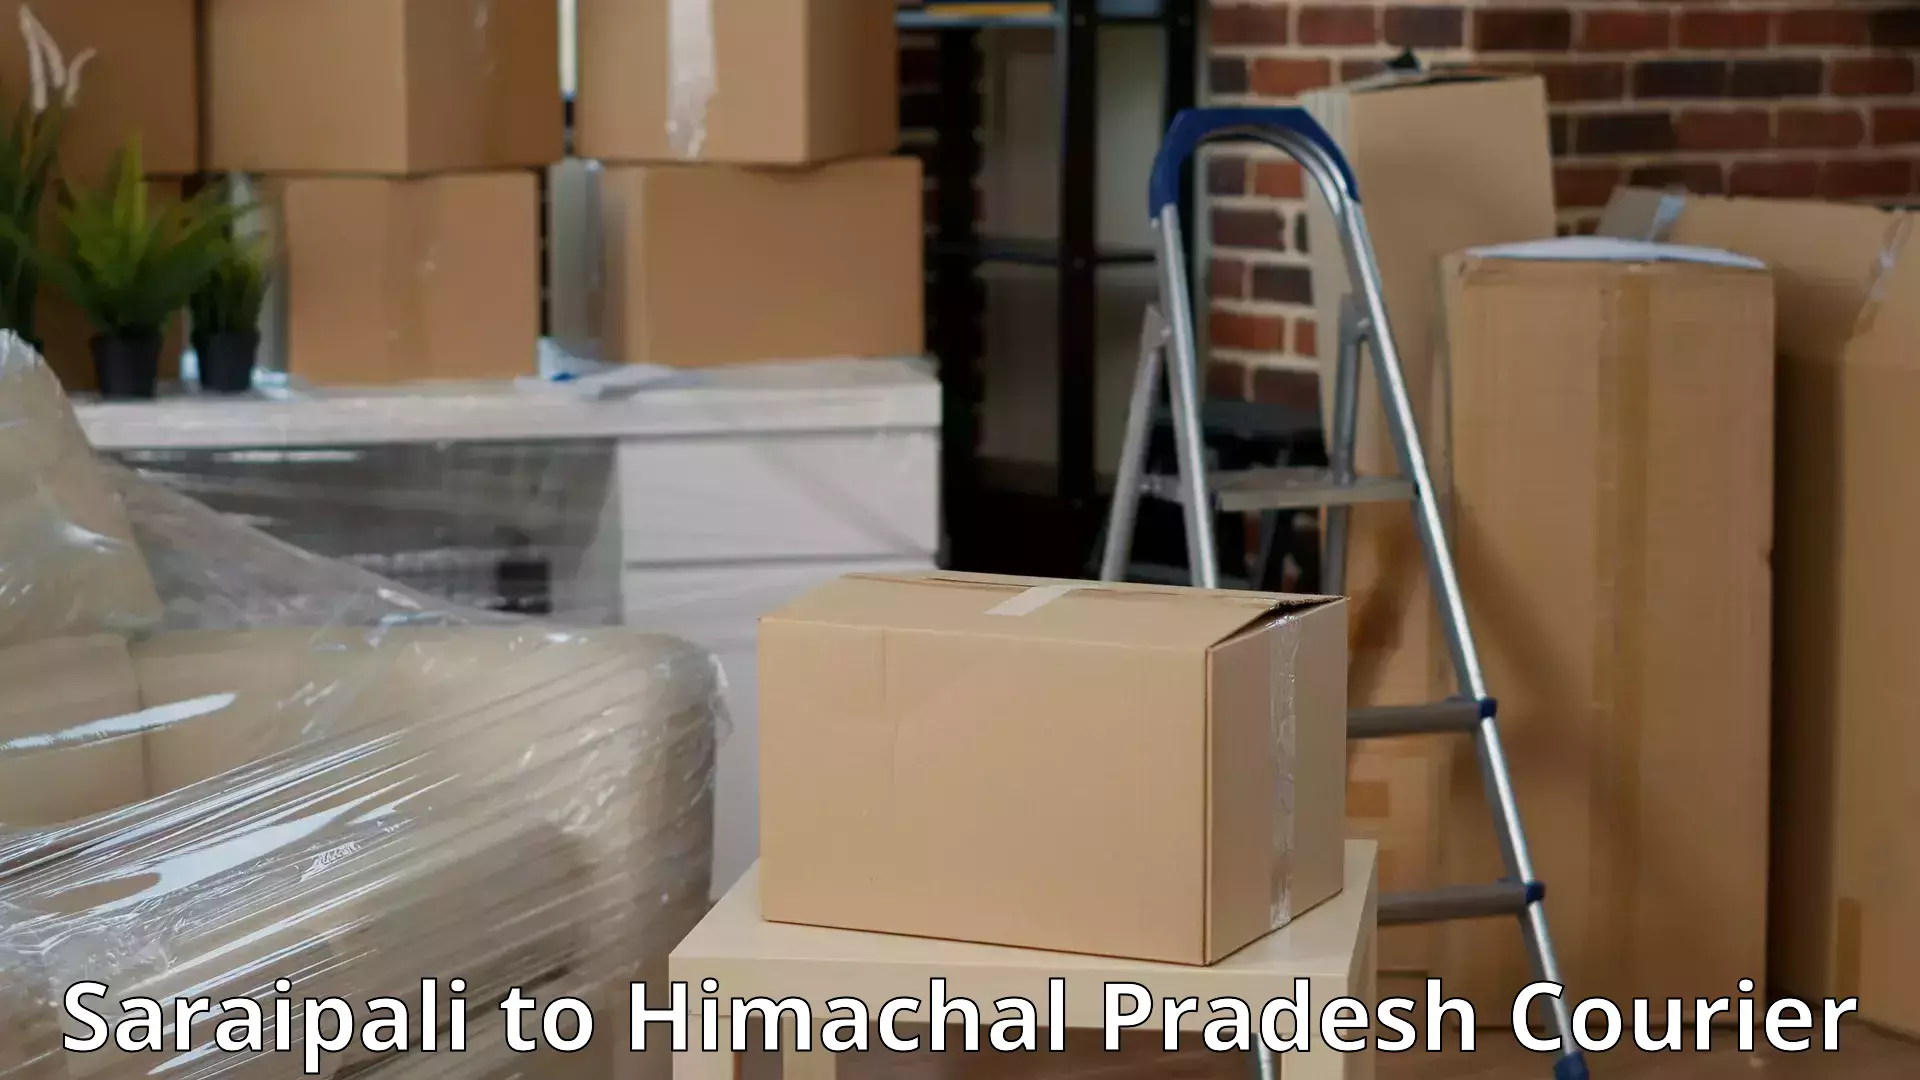 Specialized moving company Saraipali to Himachal Pradesh